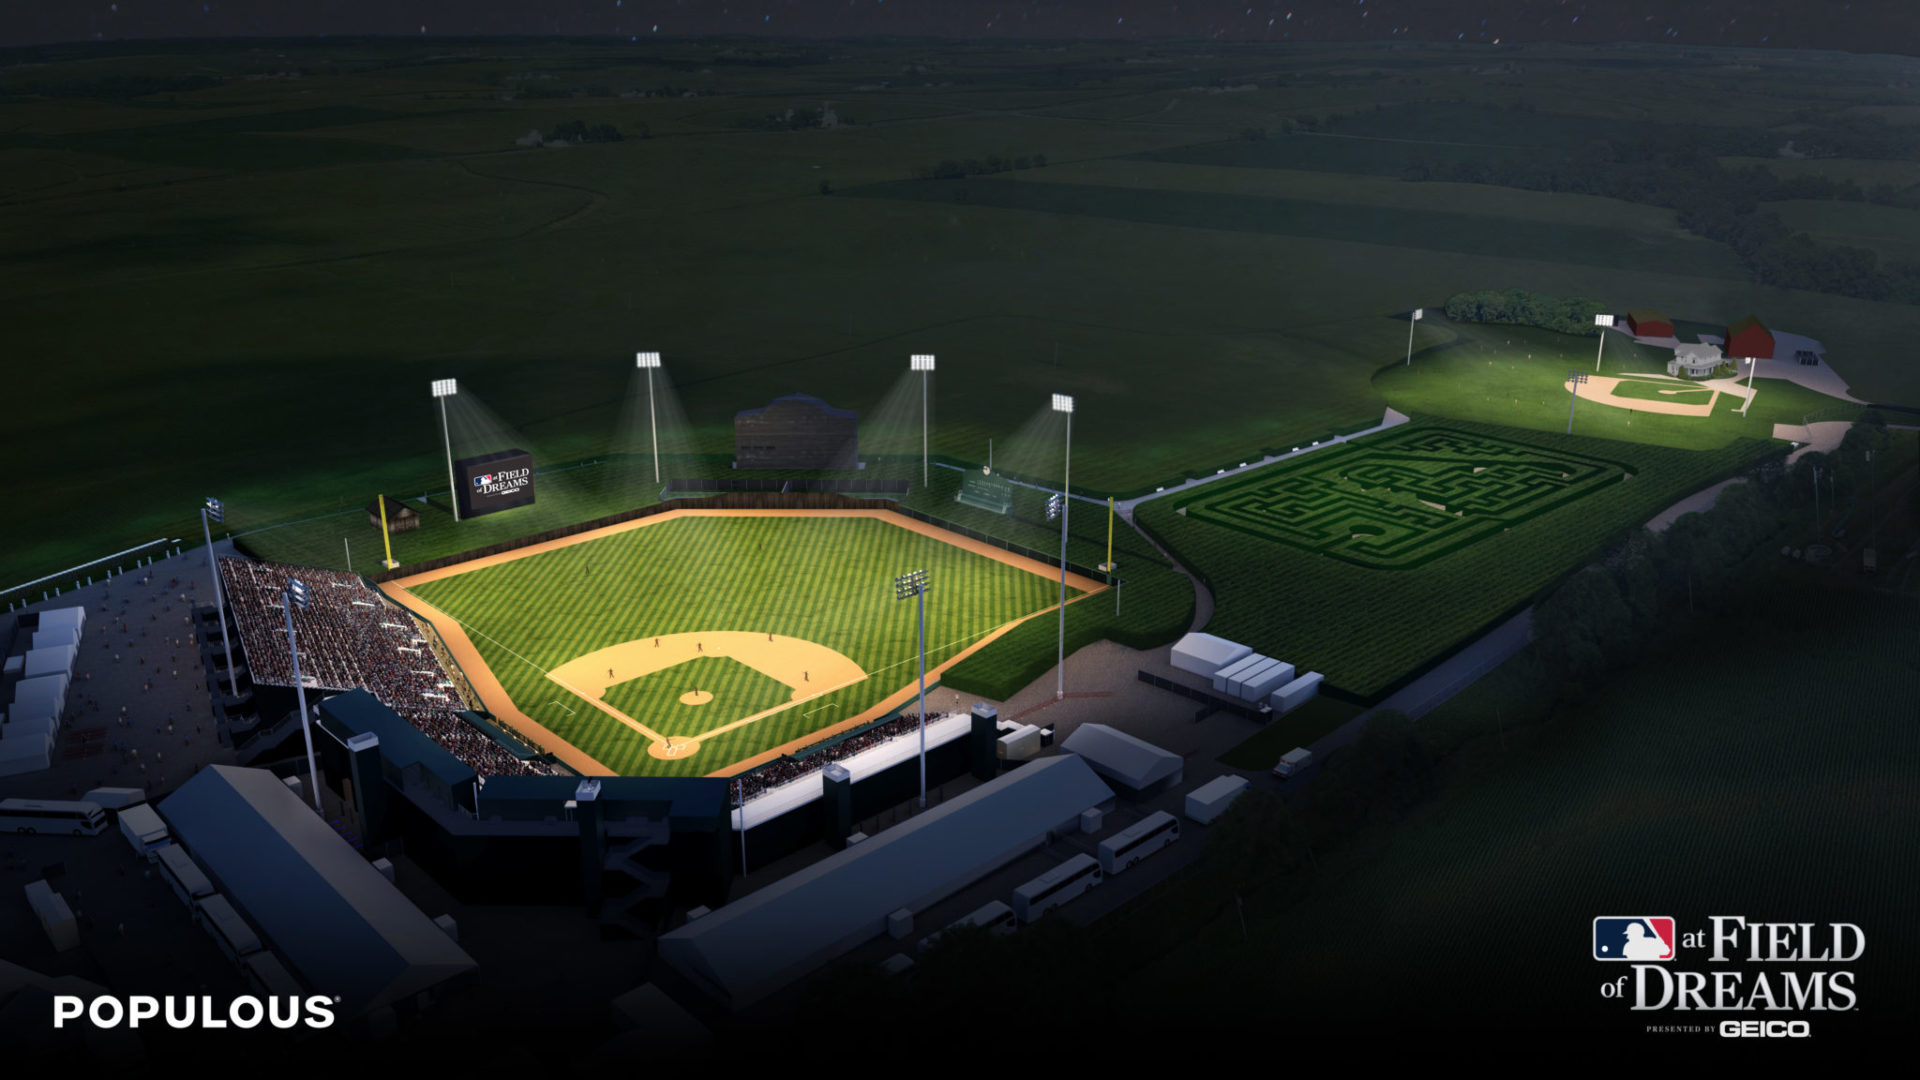 Populous-designed 'MLB at Field of Dreams' named BaseballParks.com